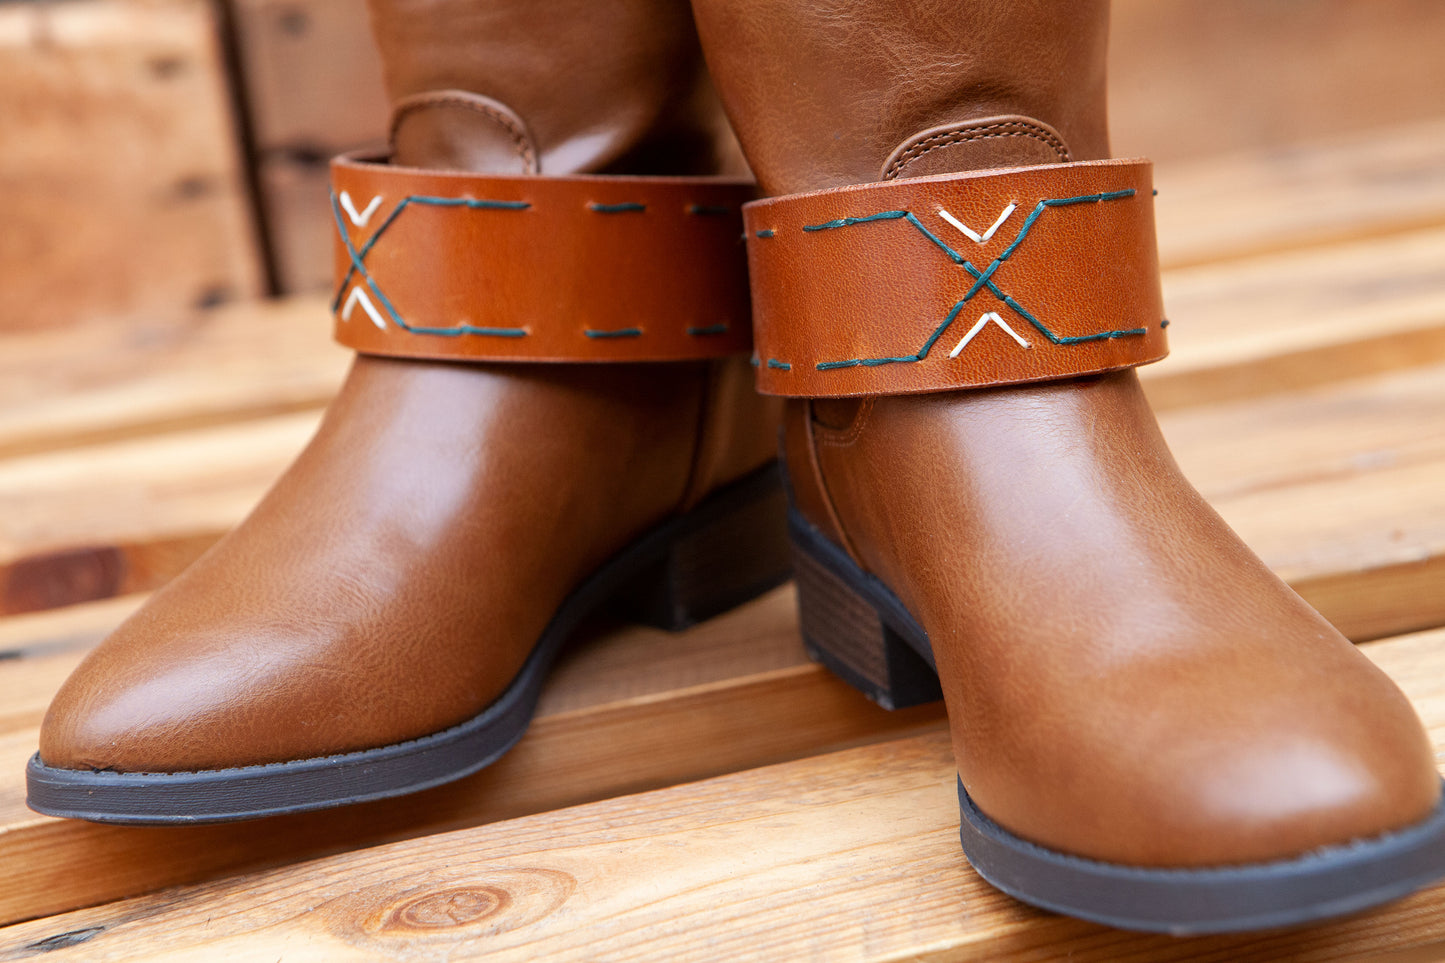 Crossbow - Handmade Premium Leather Boot Cuffs by Hoof & Heel